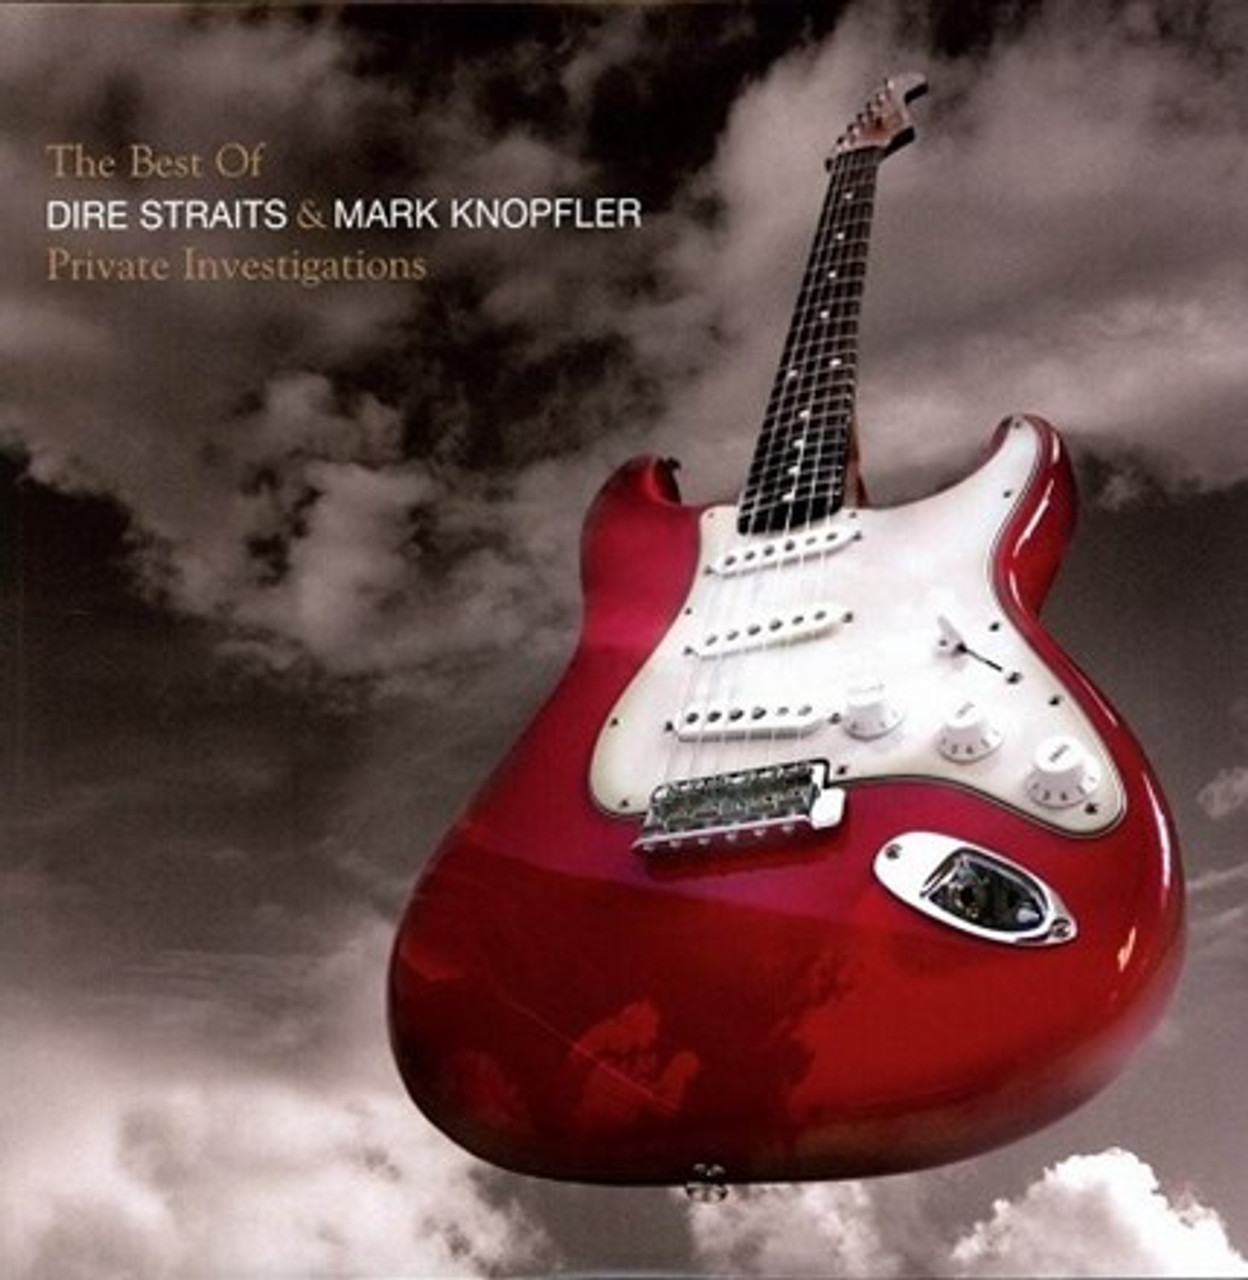 Dire Straits' Mark Knopfler announces new album: Listen to